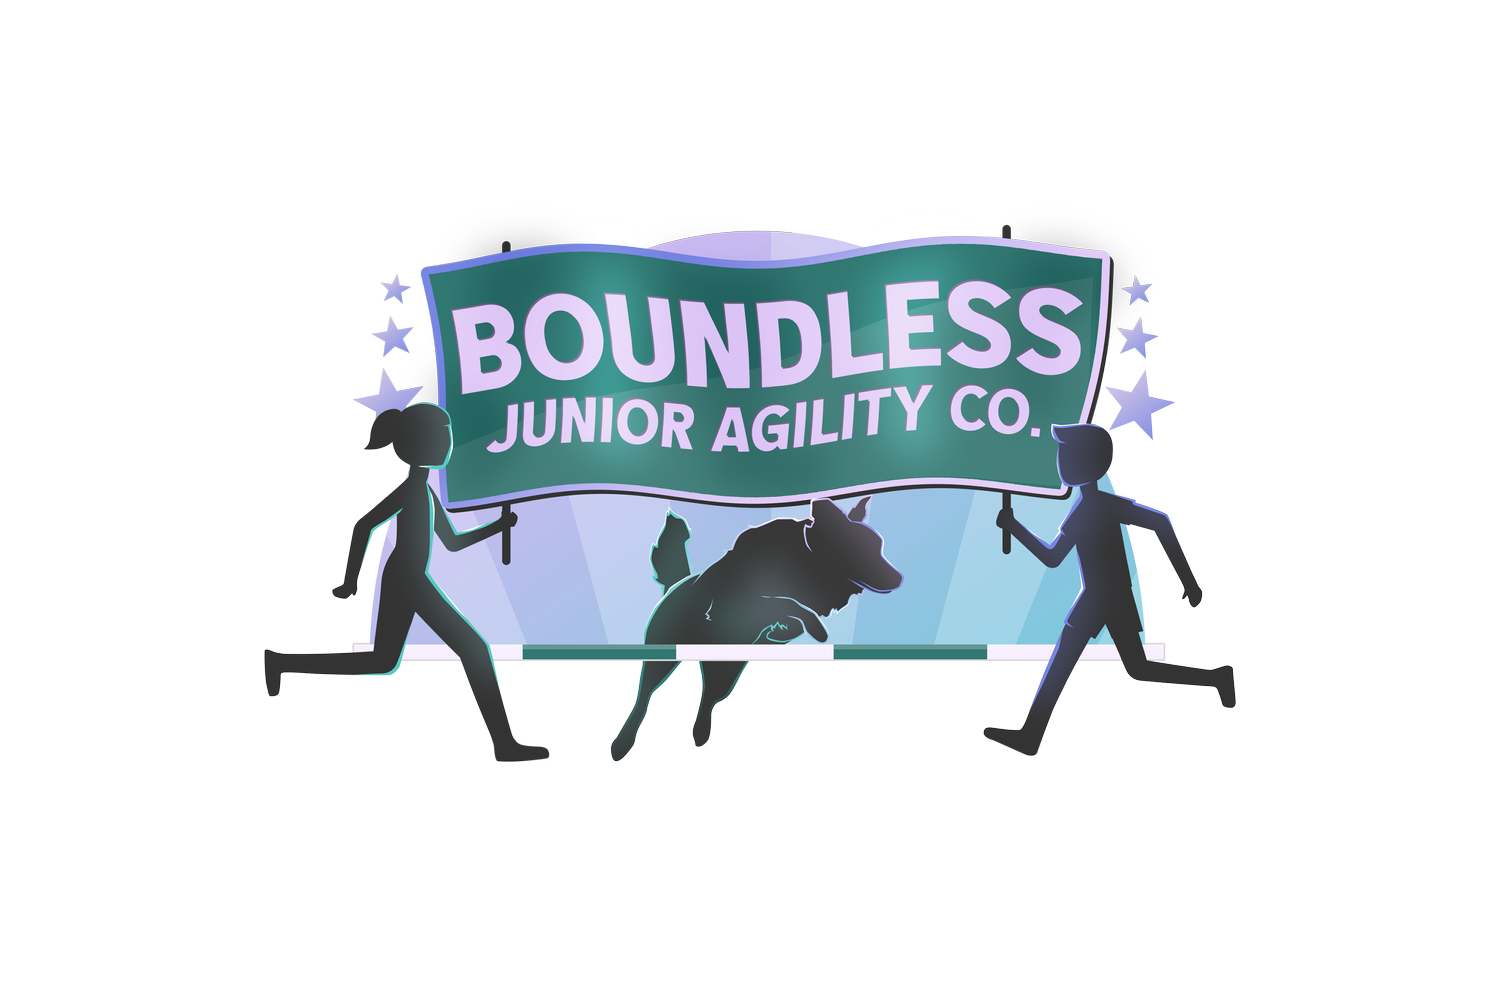 Boundless Junior Agility Co.